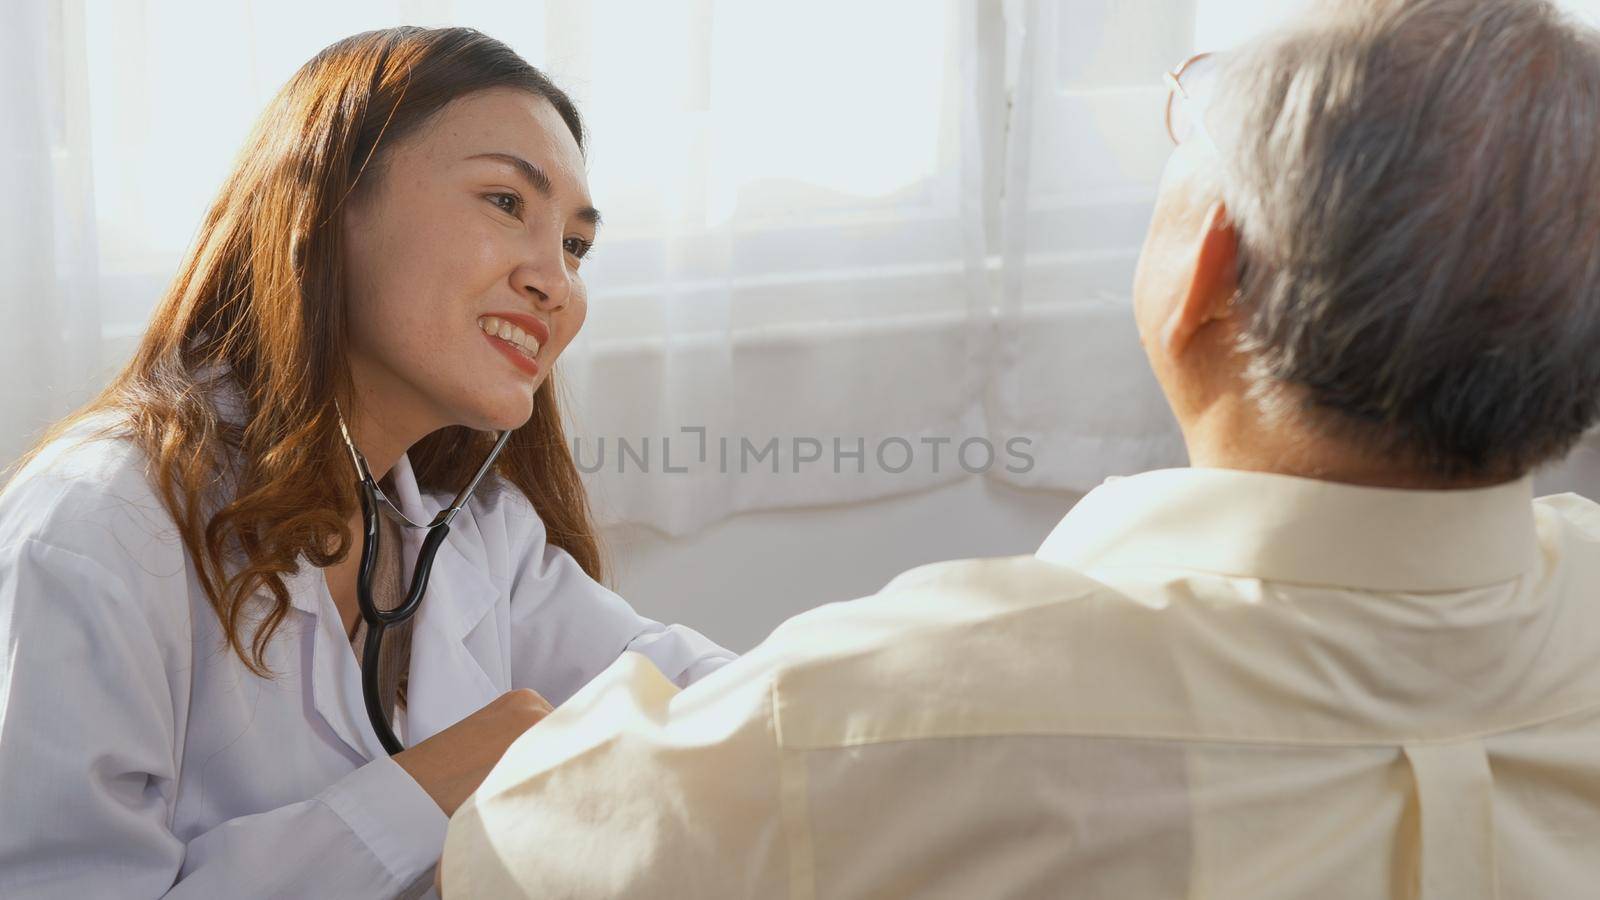 doctor wear white uniform cardiologist examining patient senior or elderly old man by Sorapop